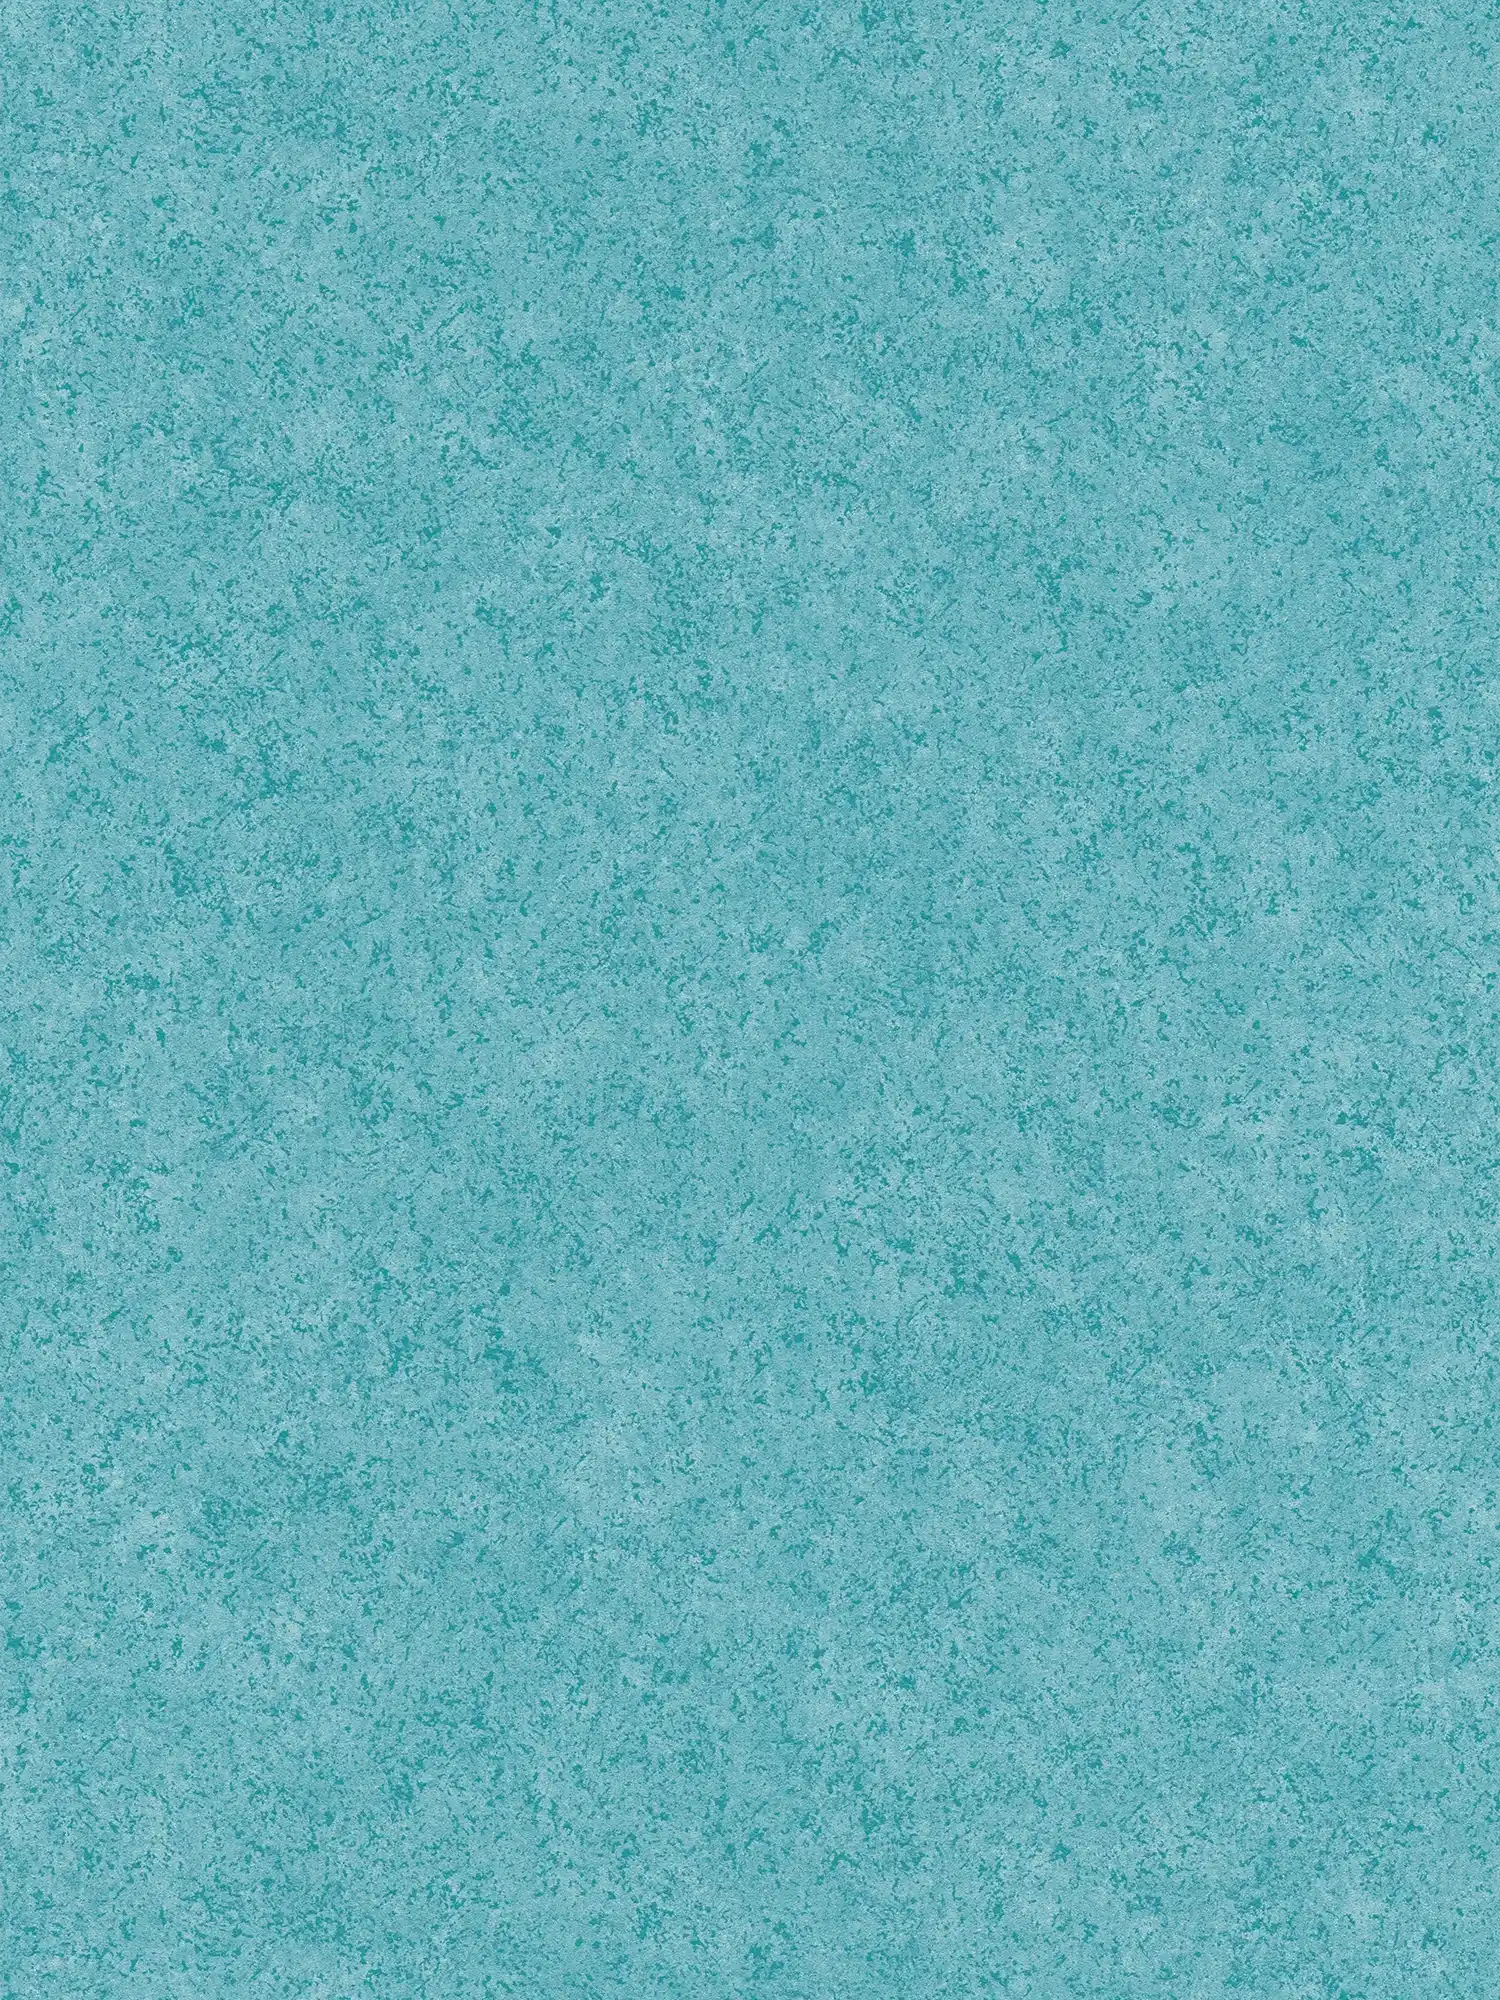 Papel pintado no tejido con aspecto de escayola con dibujo mate - azul, verde
